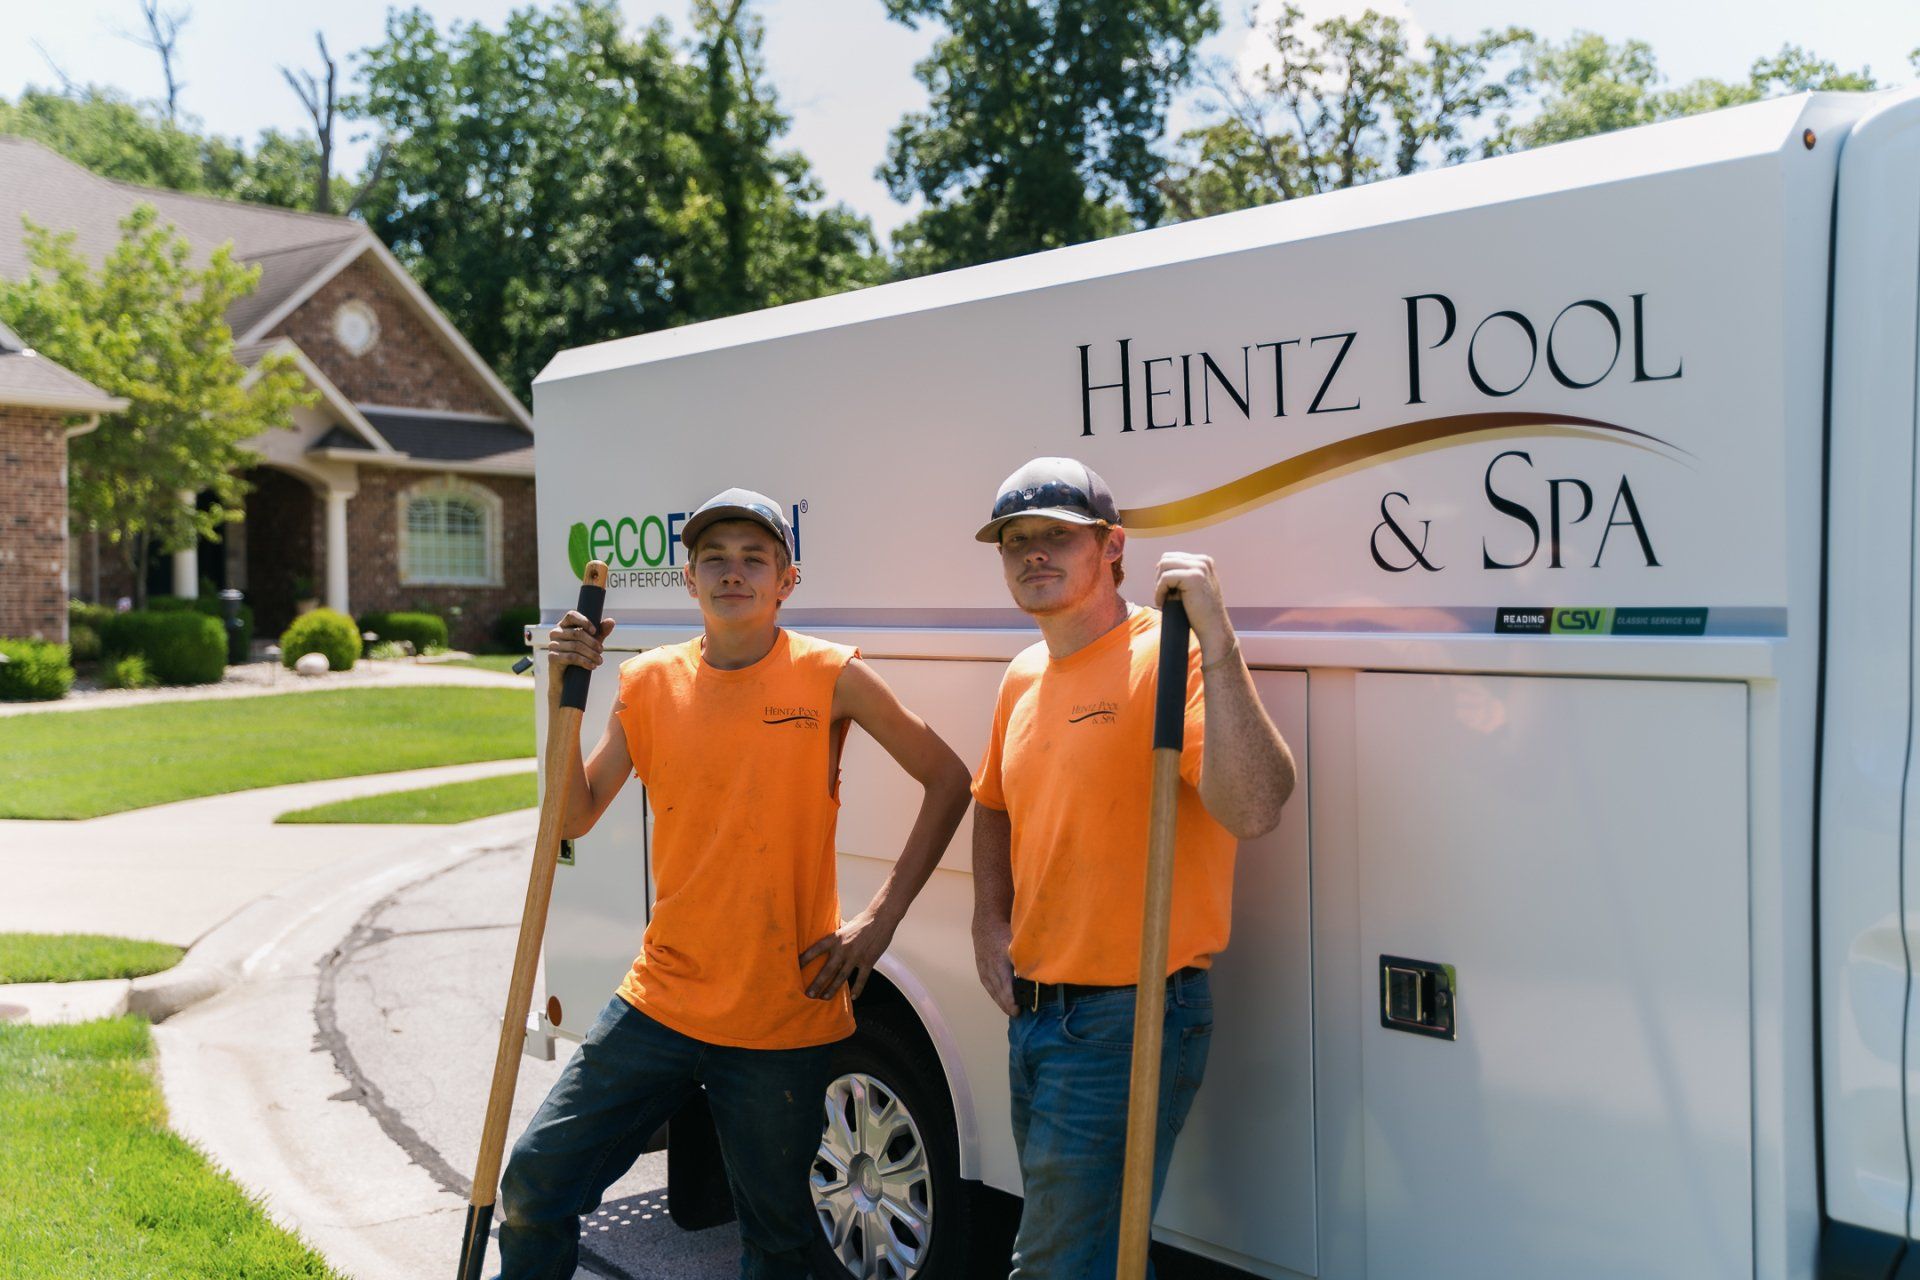 Heintz Pool & Spa worker in orange uniform with the company truck behind